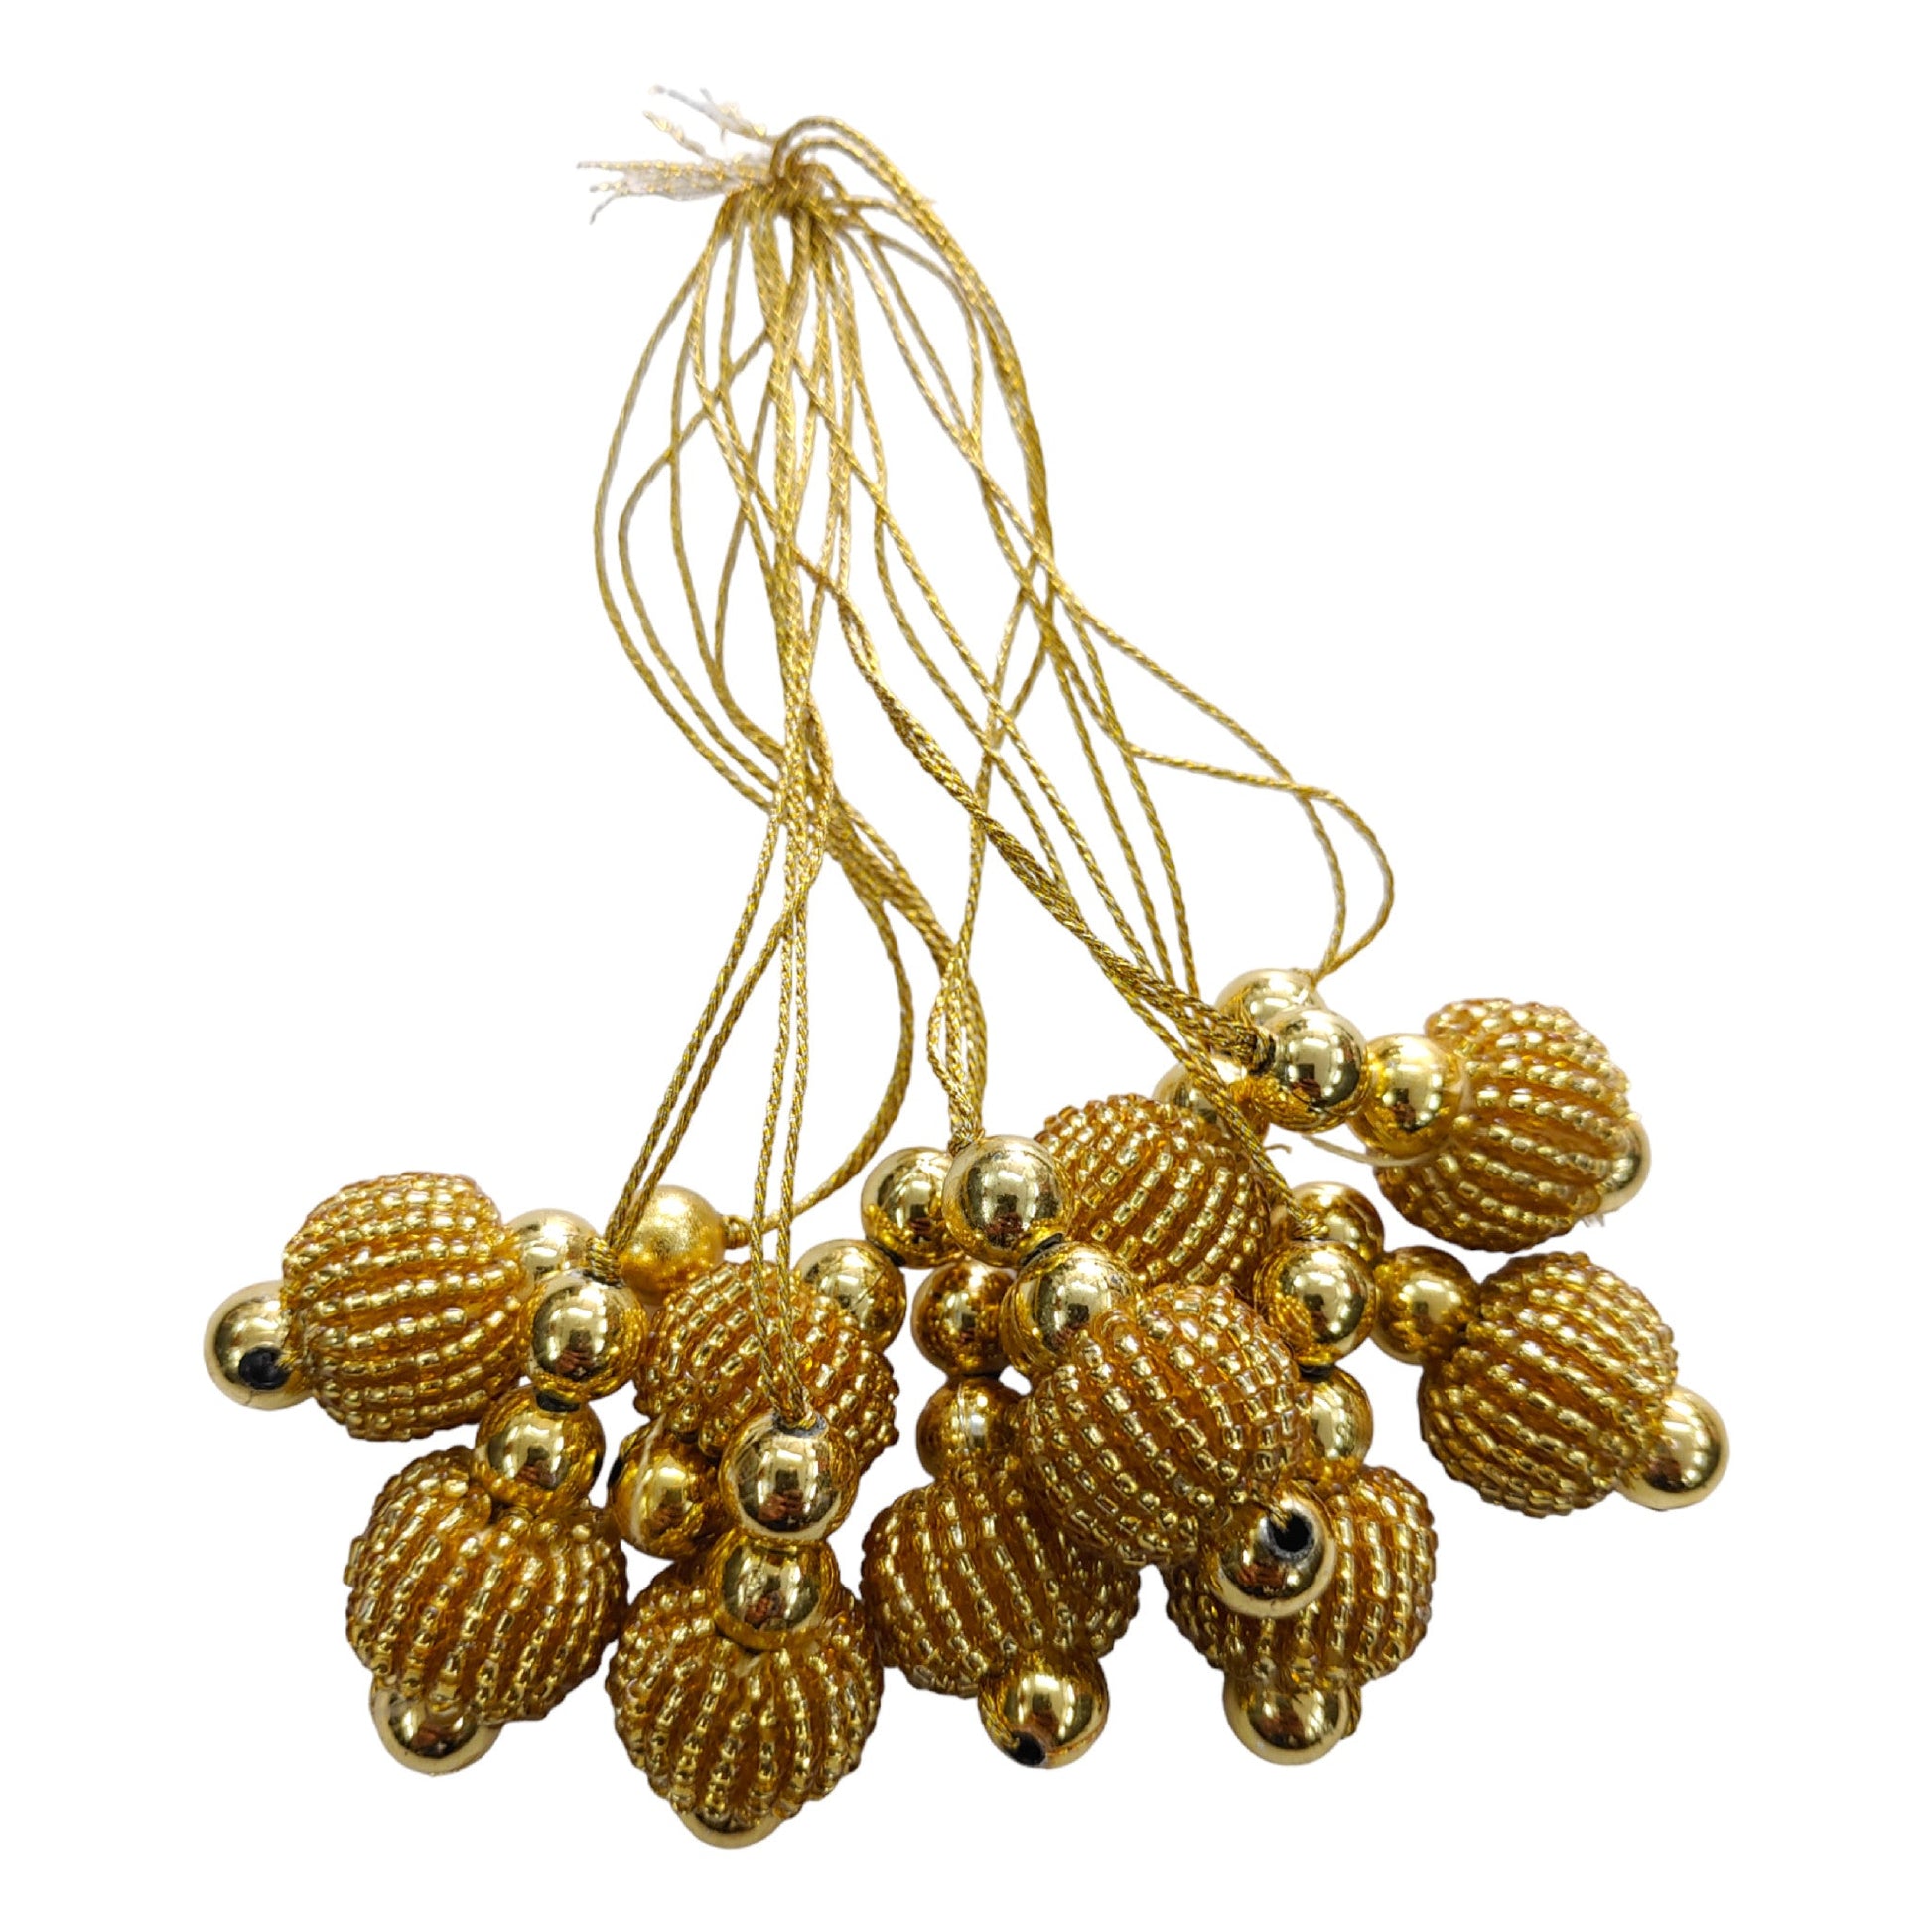 Stylish Round Golden Ball Latkan Tassels for Craft or Decoration